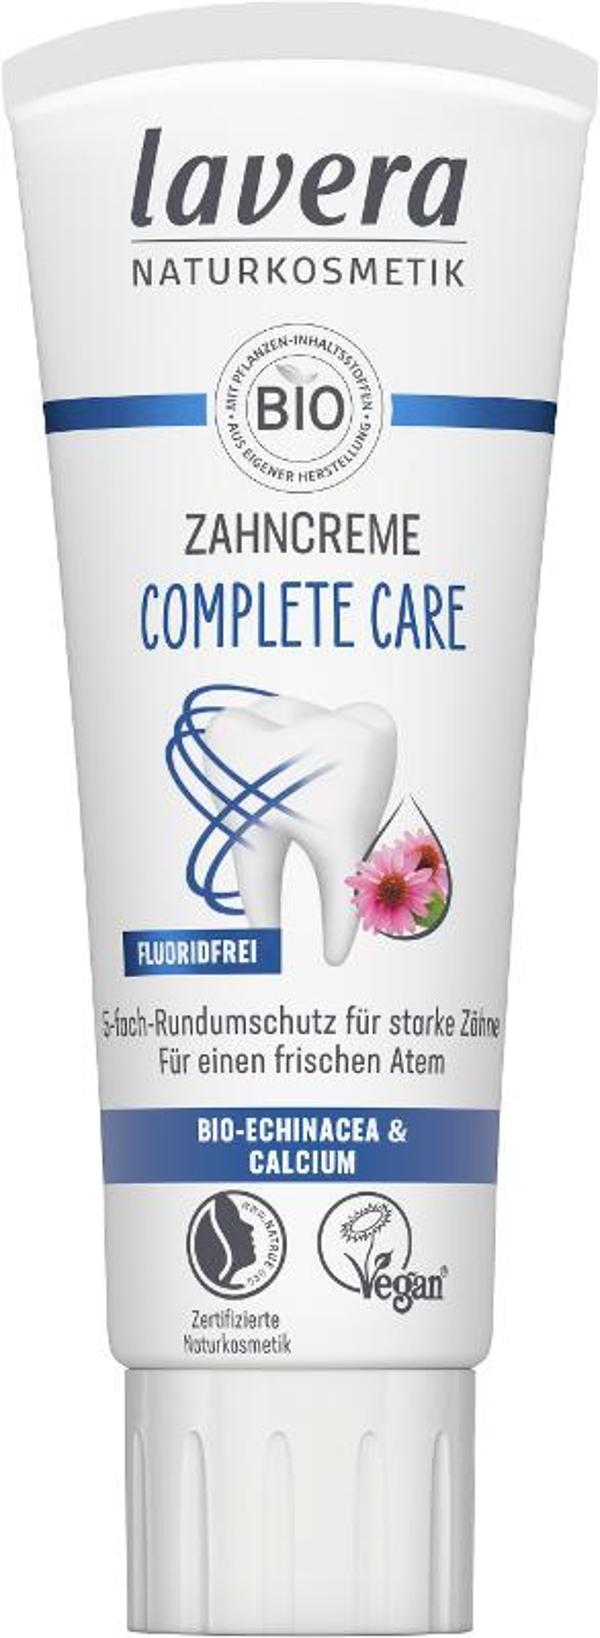 Produktfoto zu basis sensitiv Zahncreme Complete Care Fluoridfrei